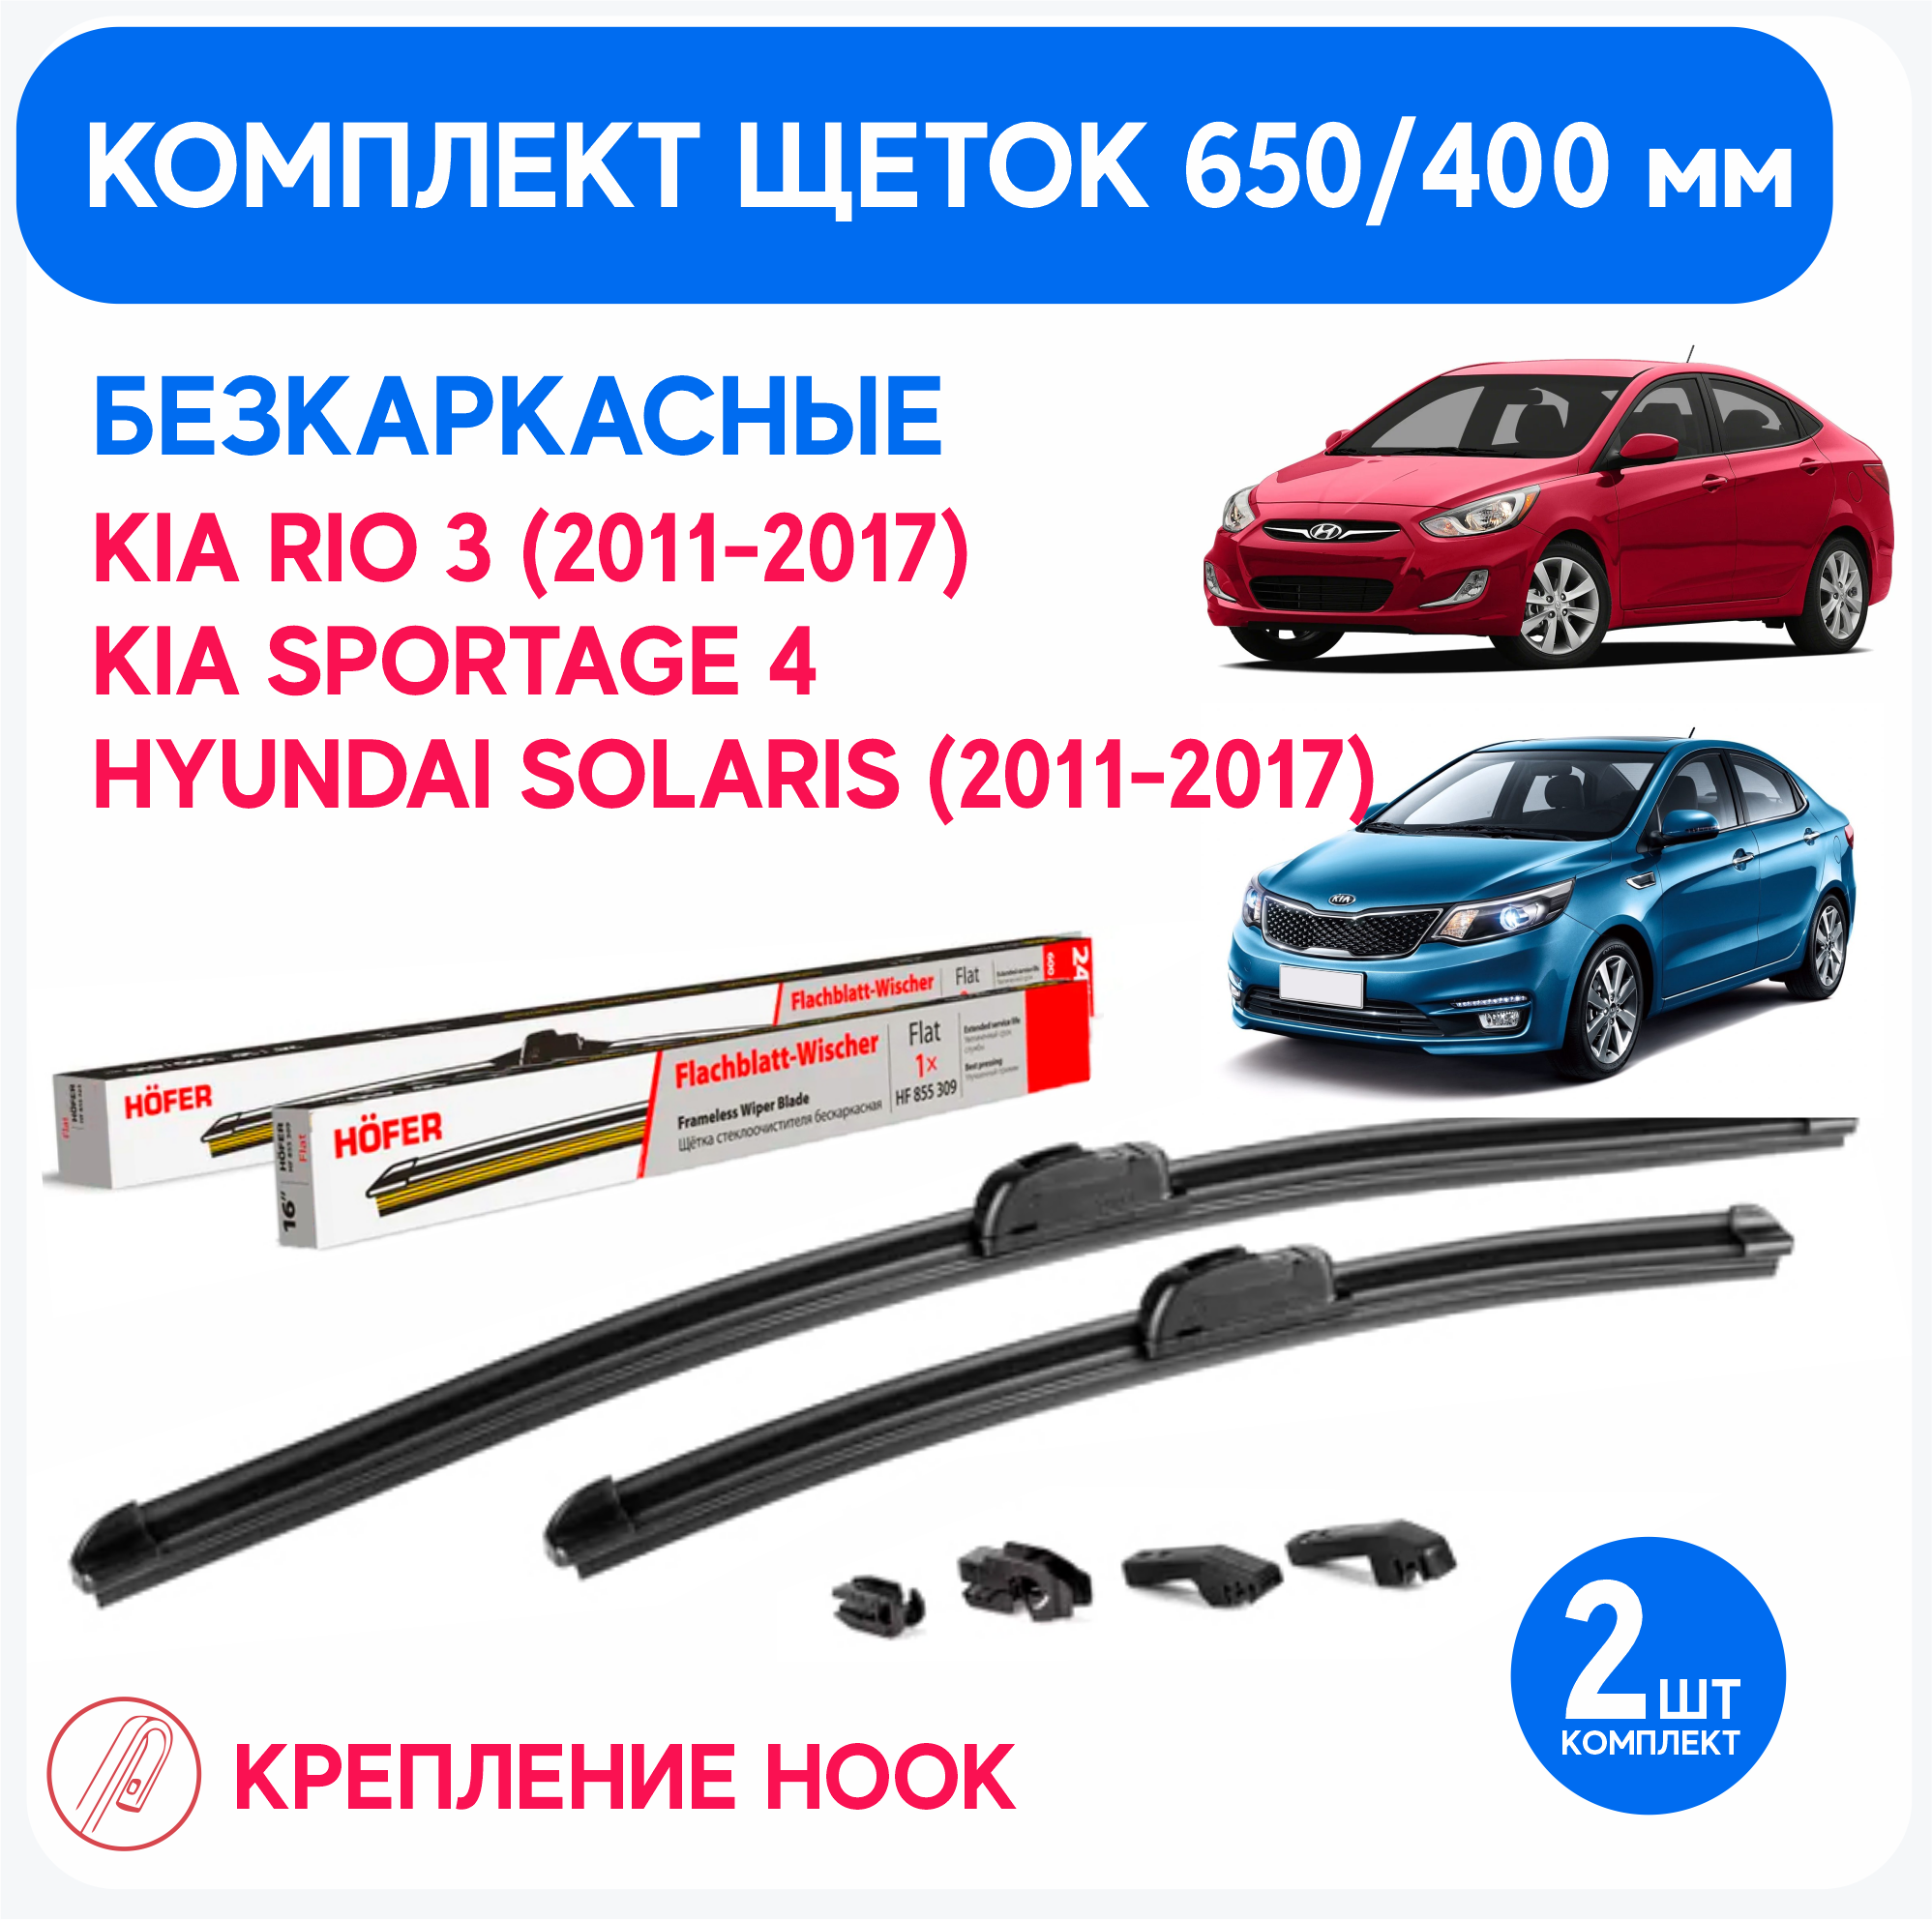 Щетки бескаркасные стеклоочистителя Kia Rio 3 (2011-2017), Kia Sportage 4, Hyundai Solaris (2011-2017) 650 / 400 мм, комплект 2 шт.